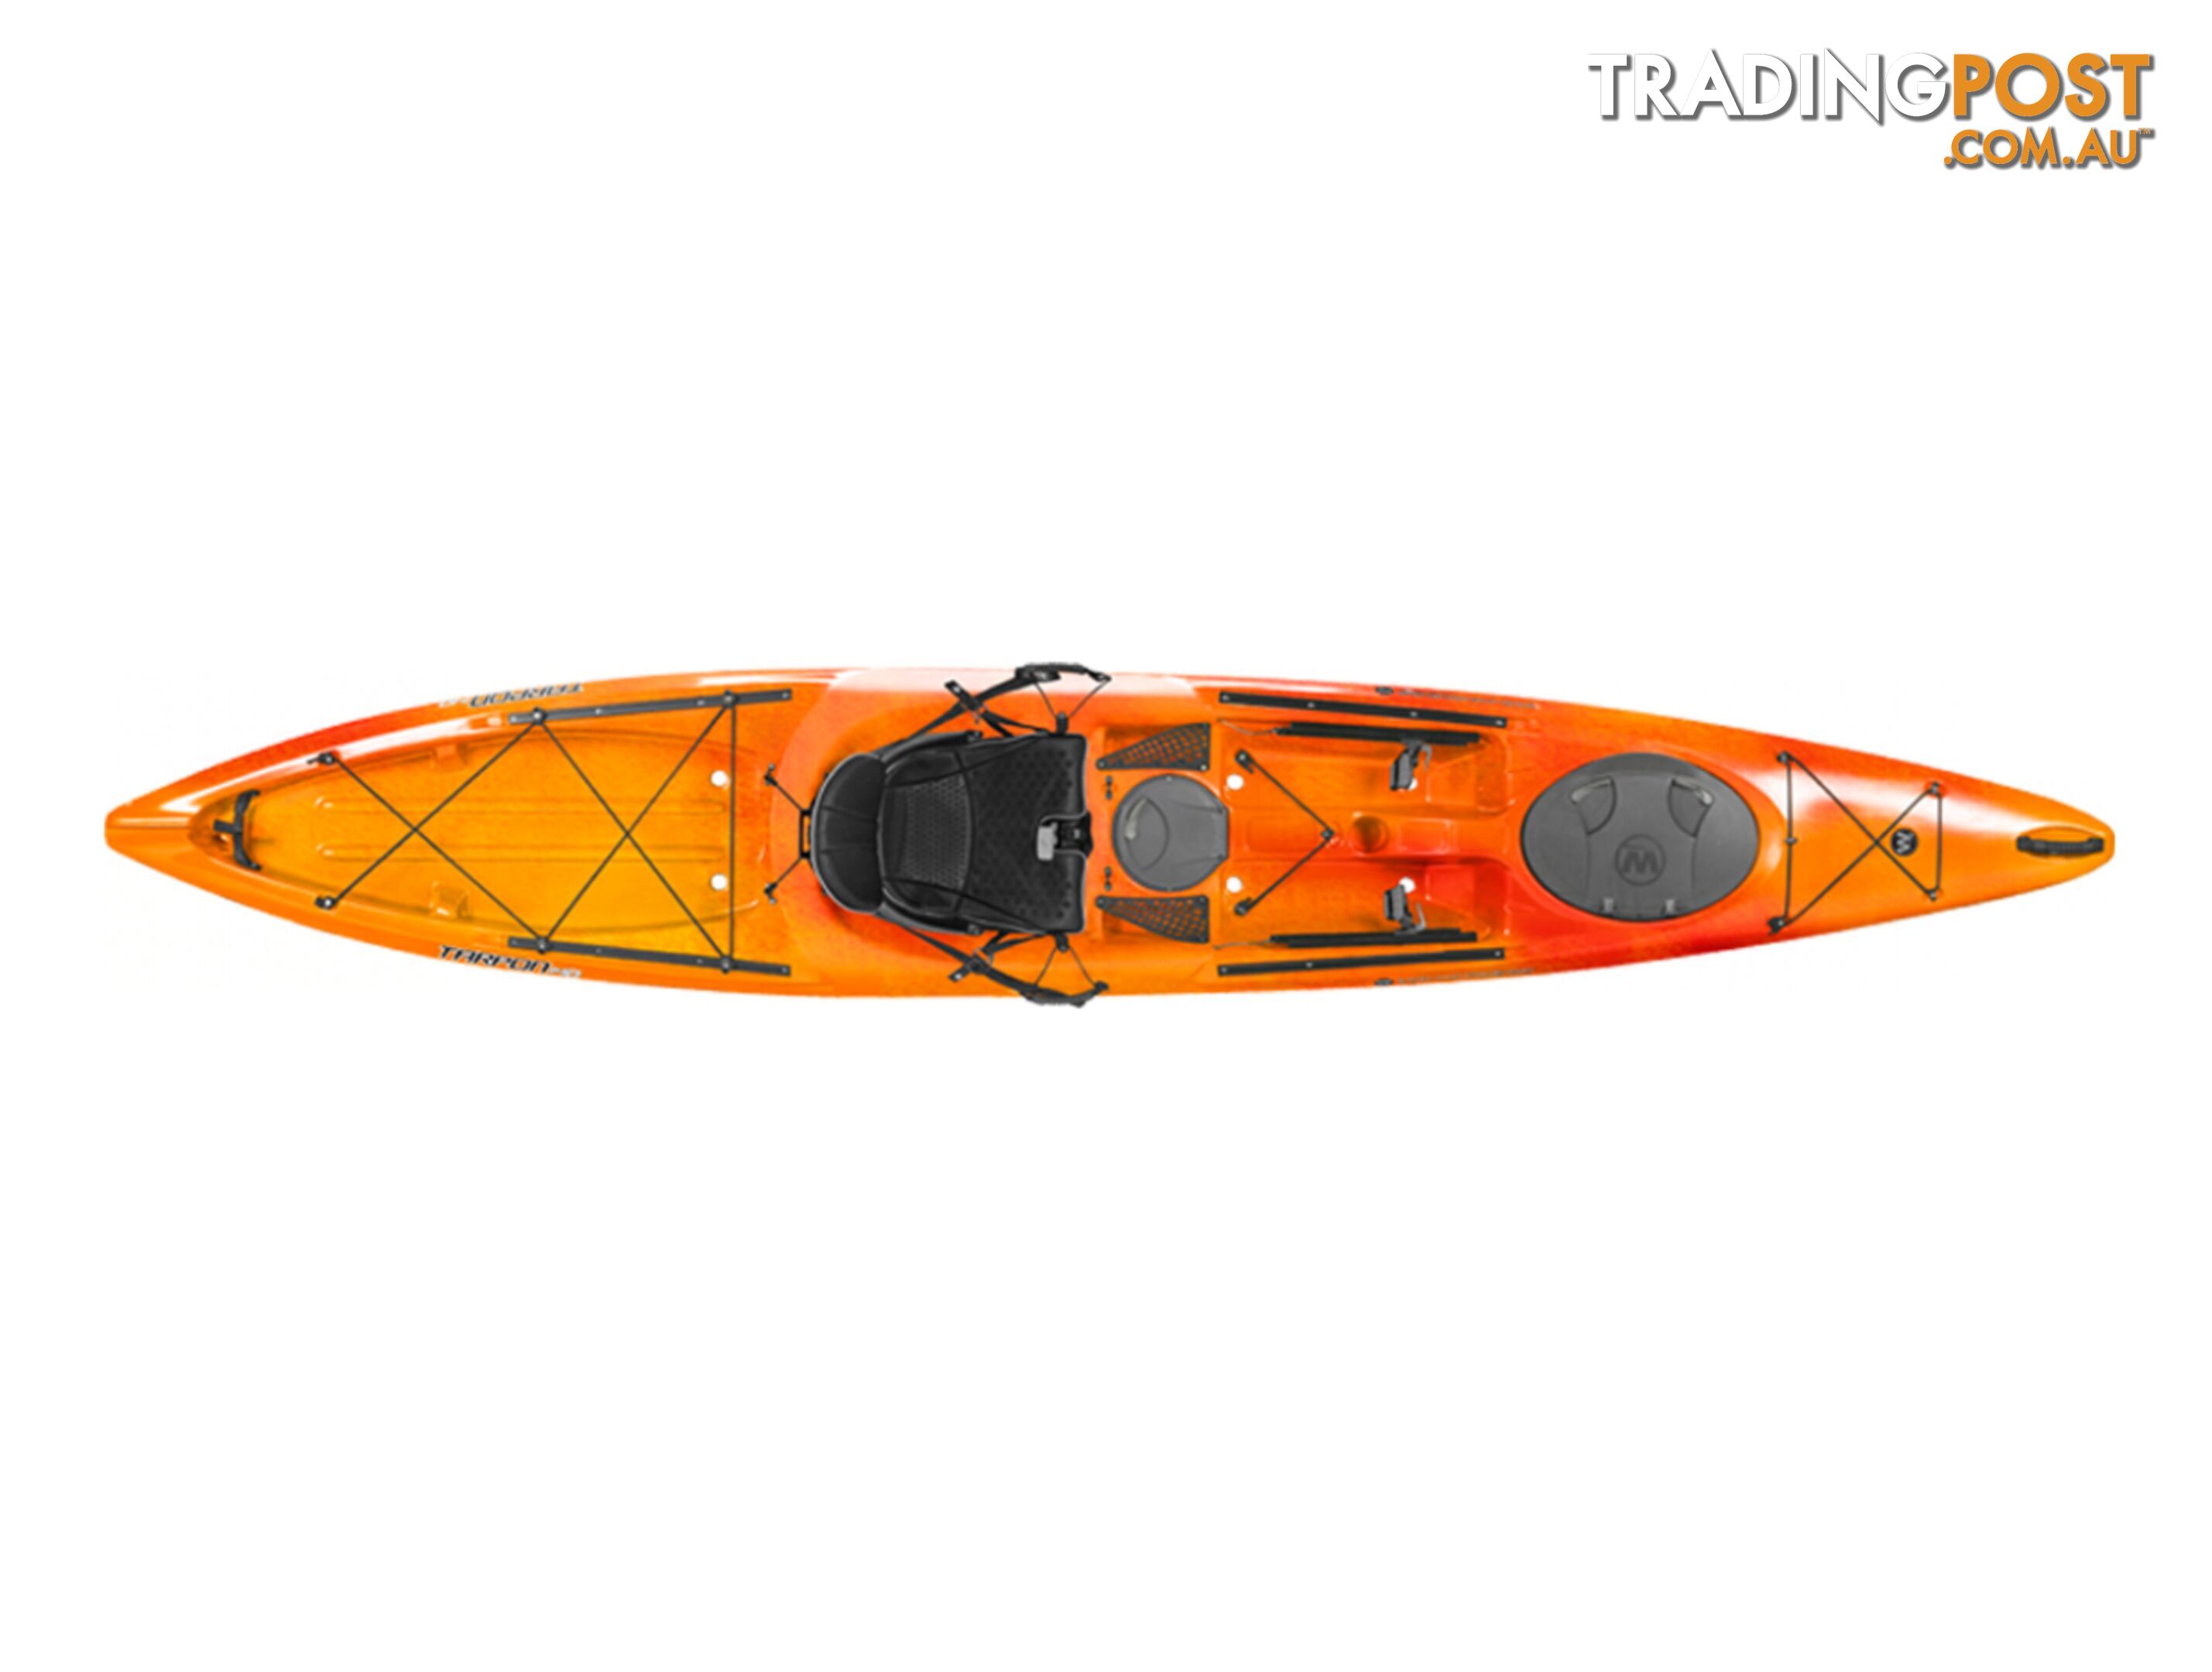 Brand new Wilderness Systems Tarpon 140 sit on top touring kayak.